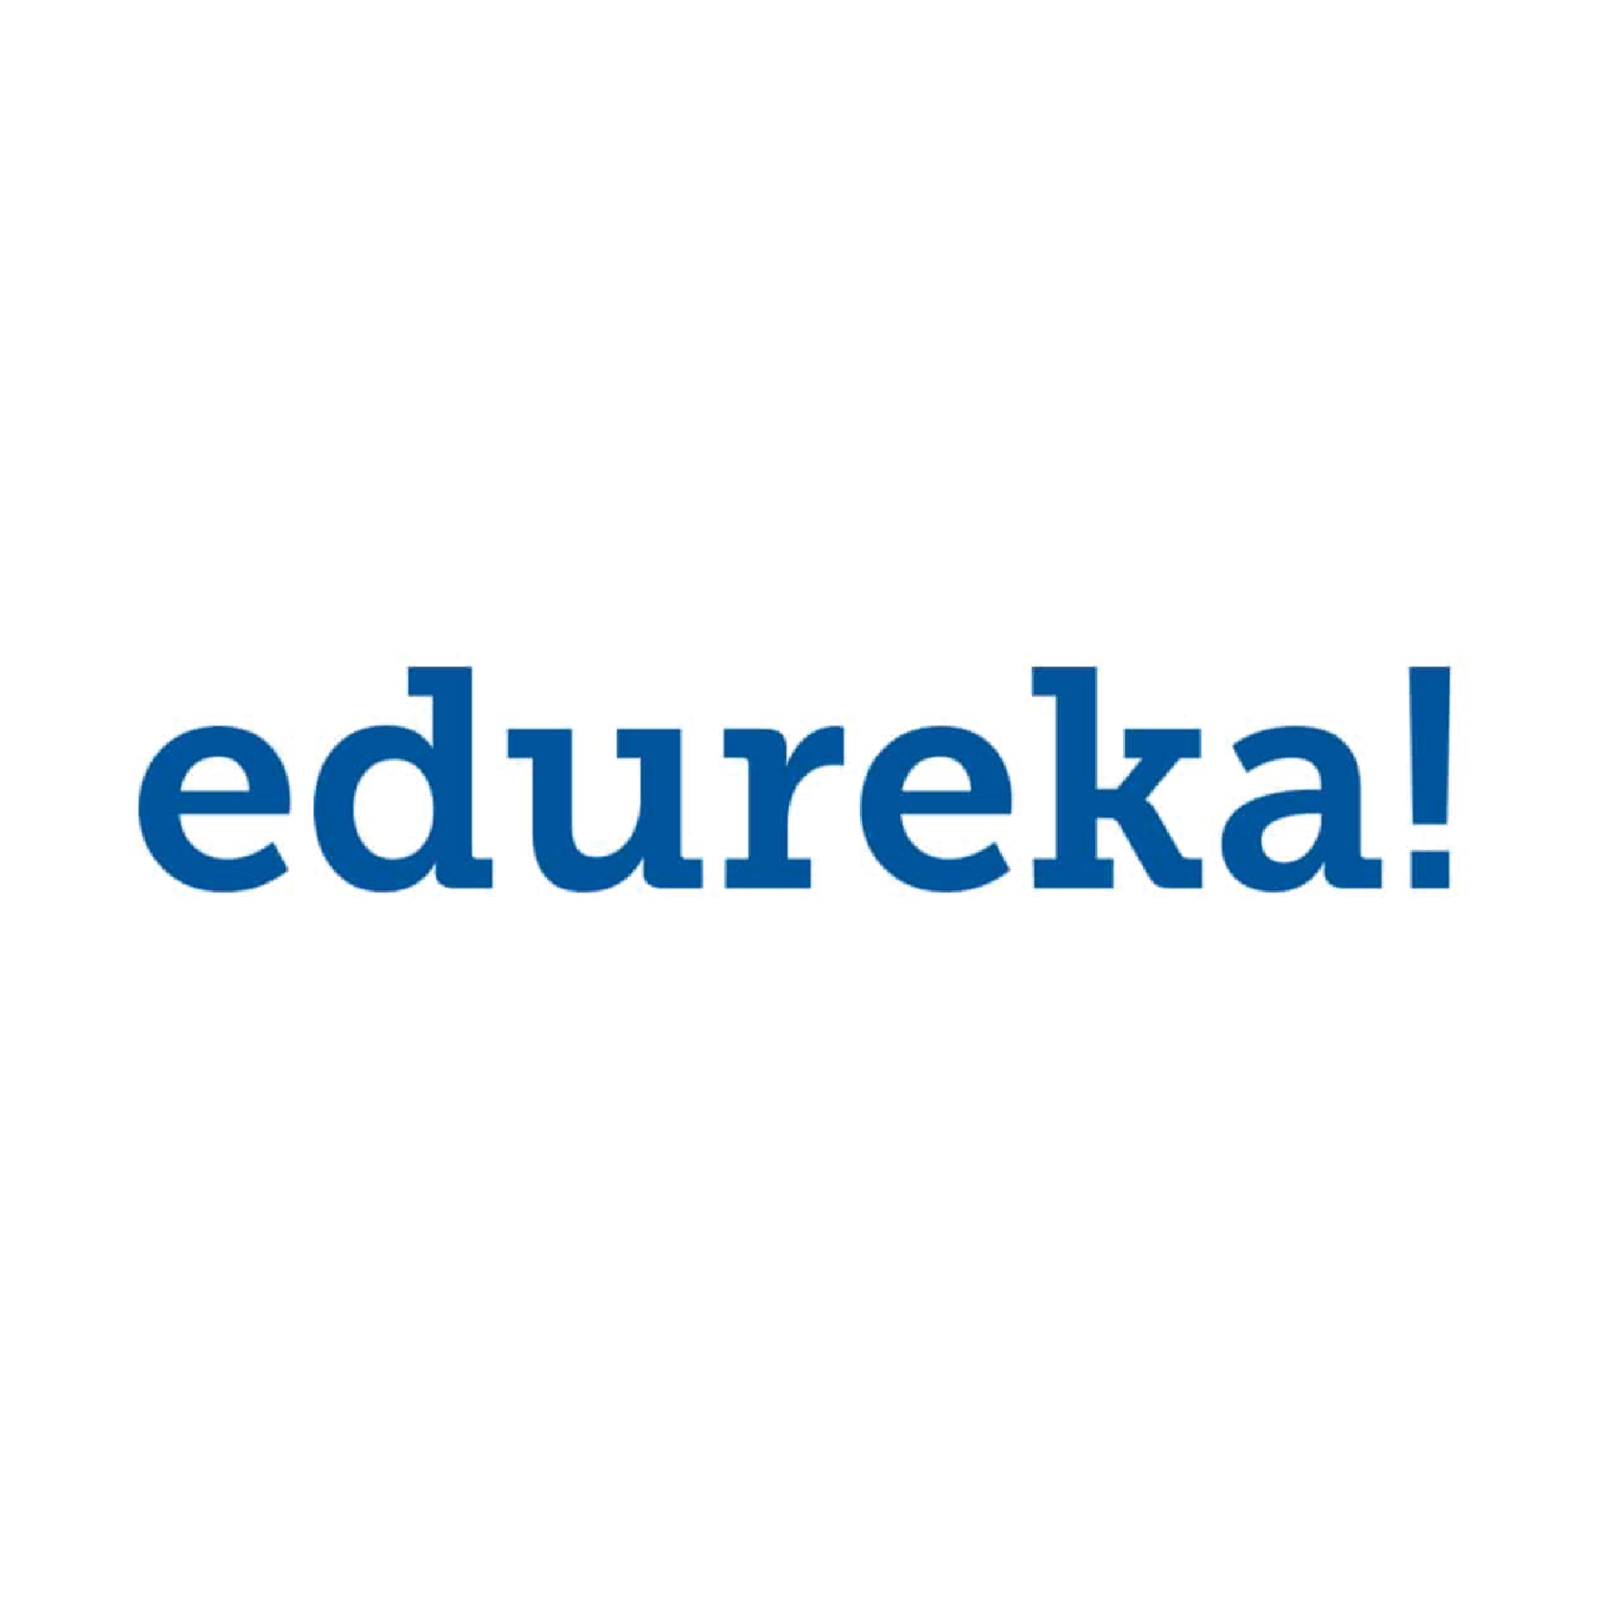 Edureka | YourStory